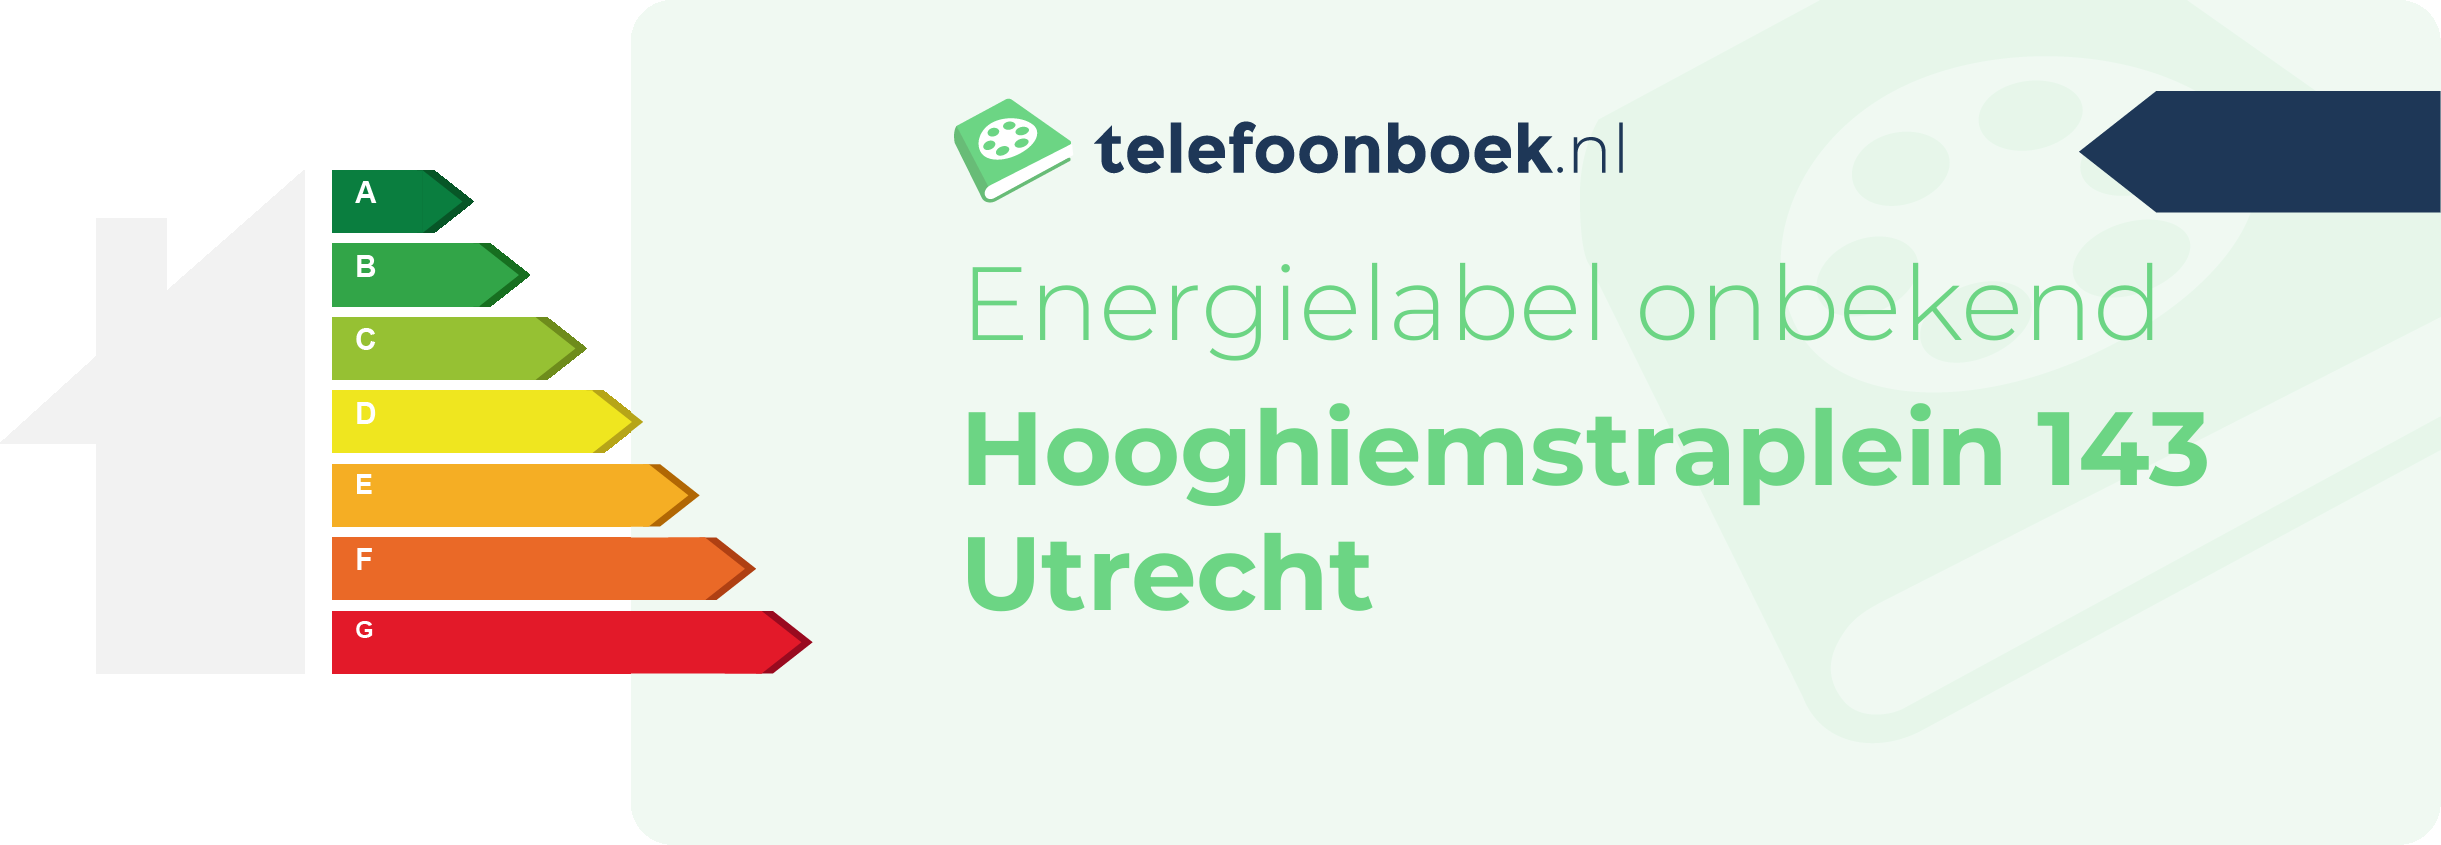 Energielabel Hooghiemstraplein 143 Utrecht